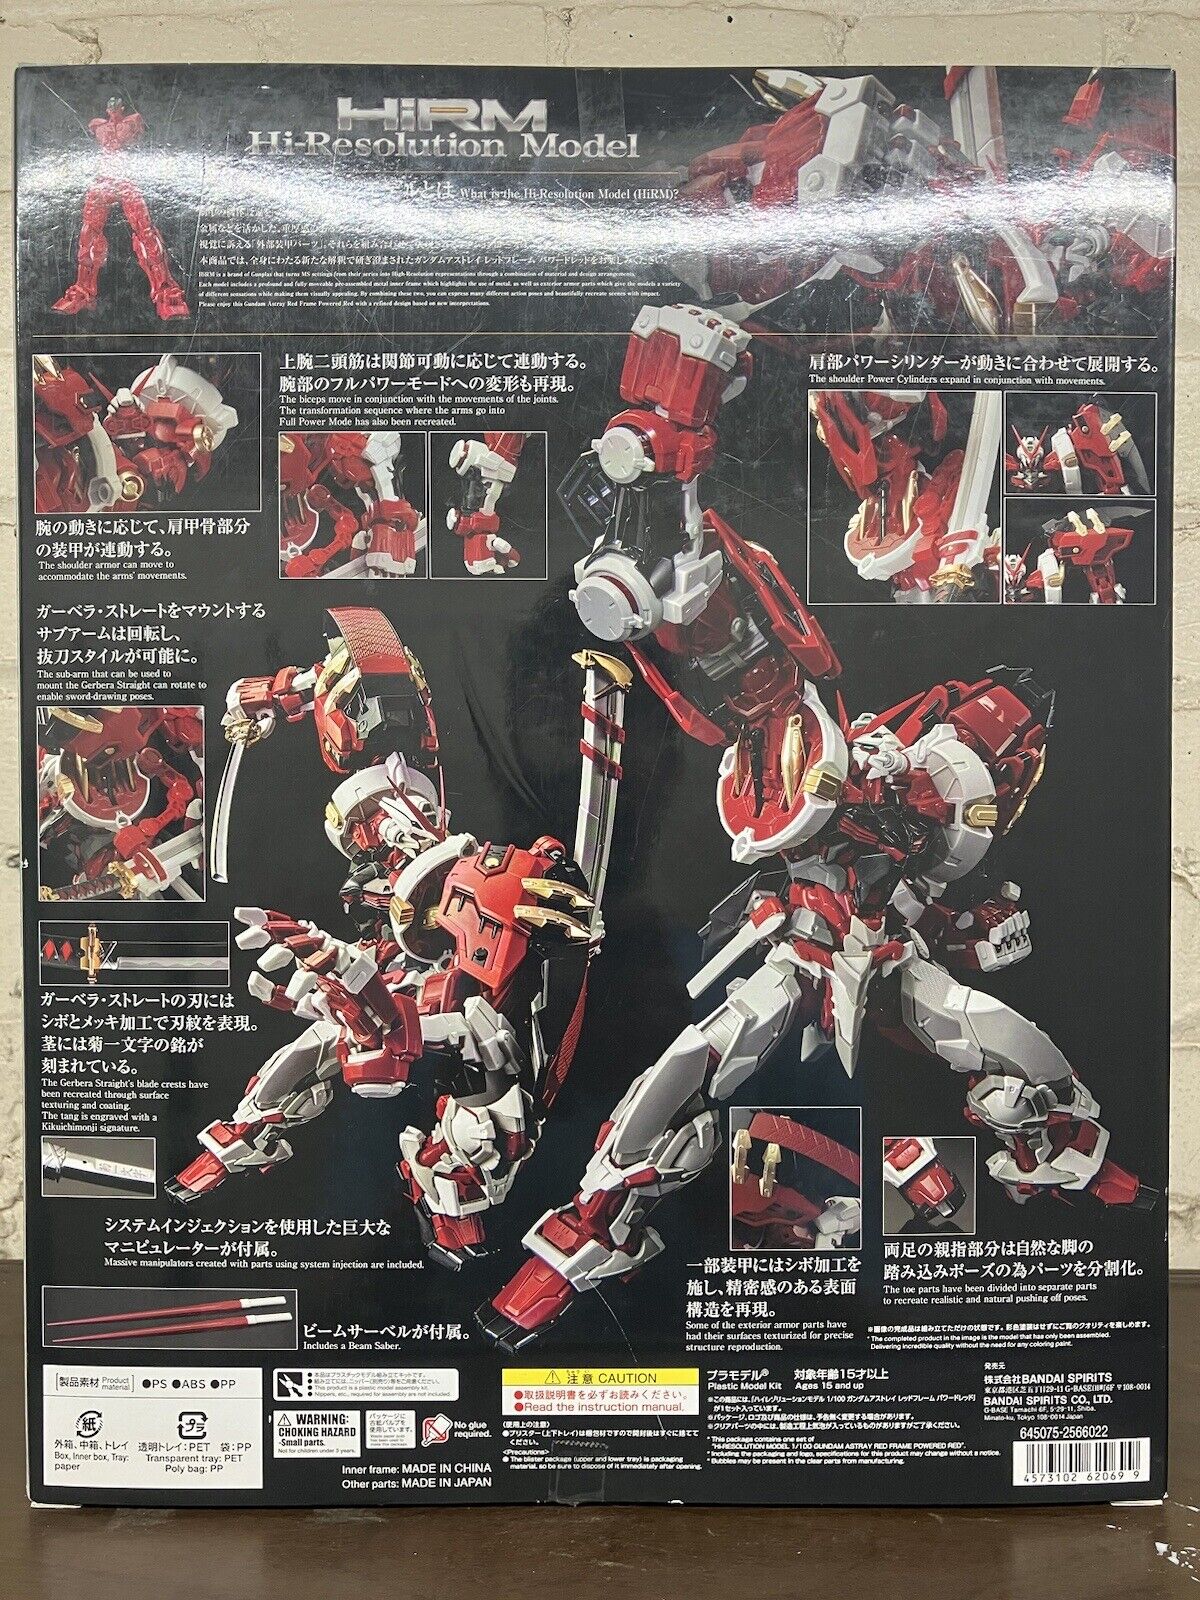 Bandai Gundam HiRM Astray Red Frame Powered Red 1/100 Hi Resolution Model Kit